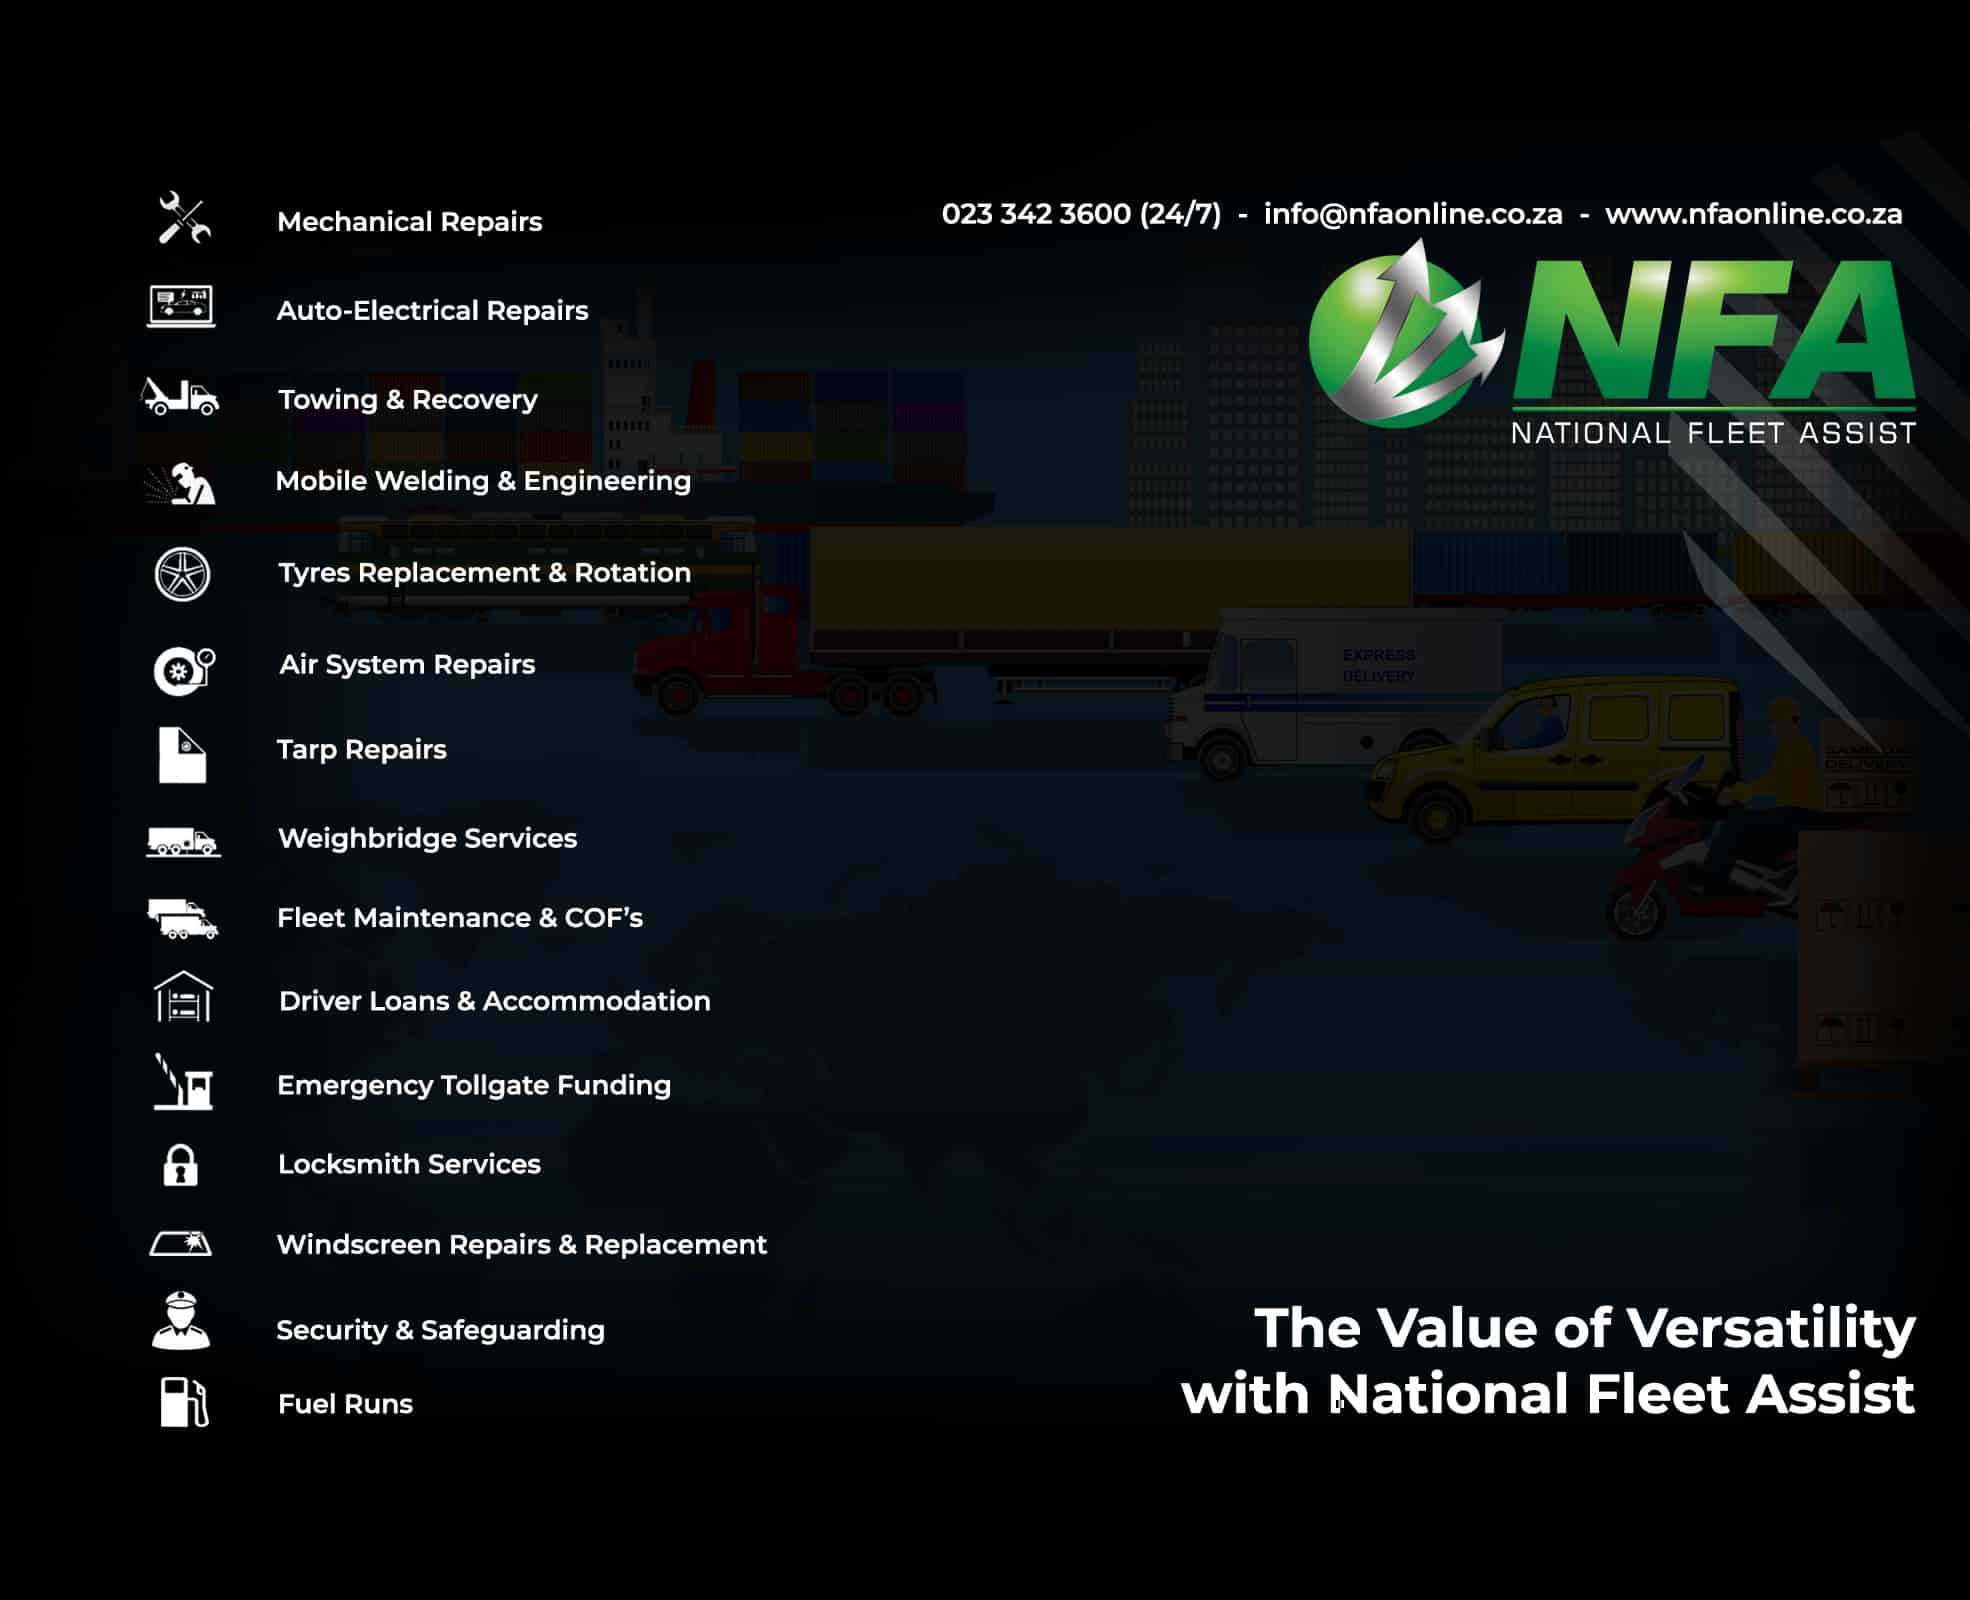 National Fleet Assist The Value of Versatility with National Fleet Assist